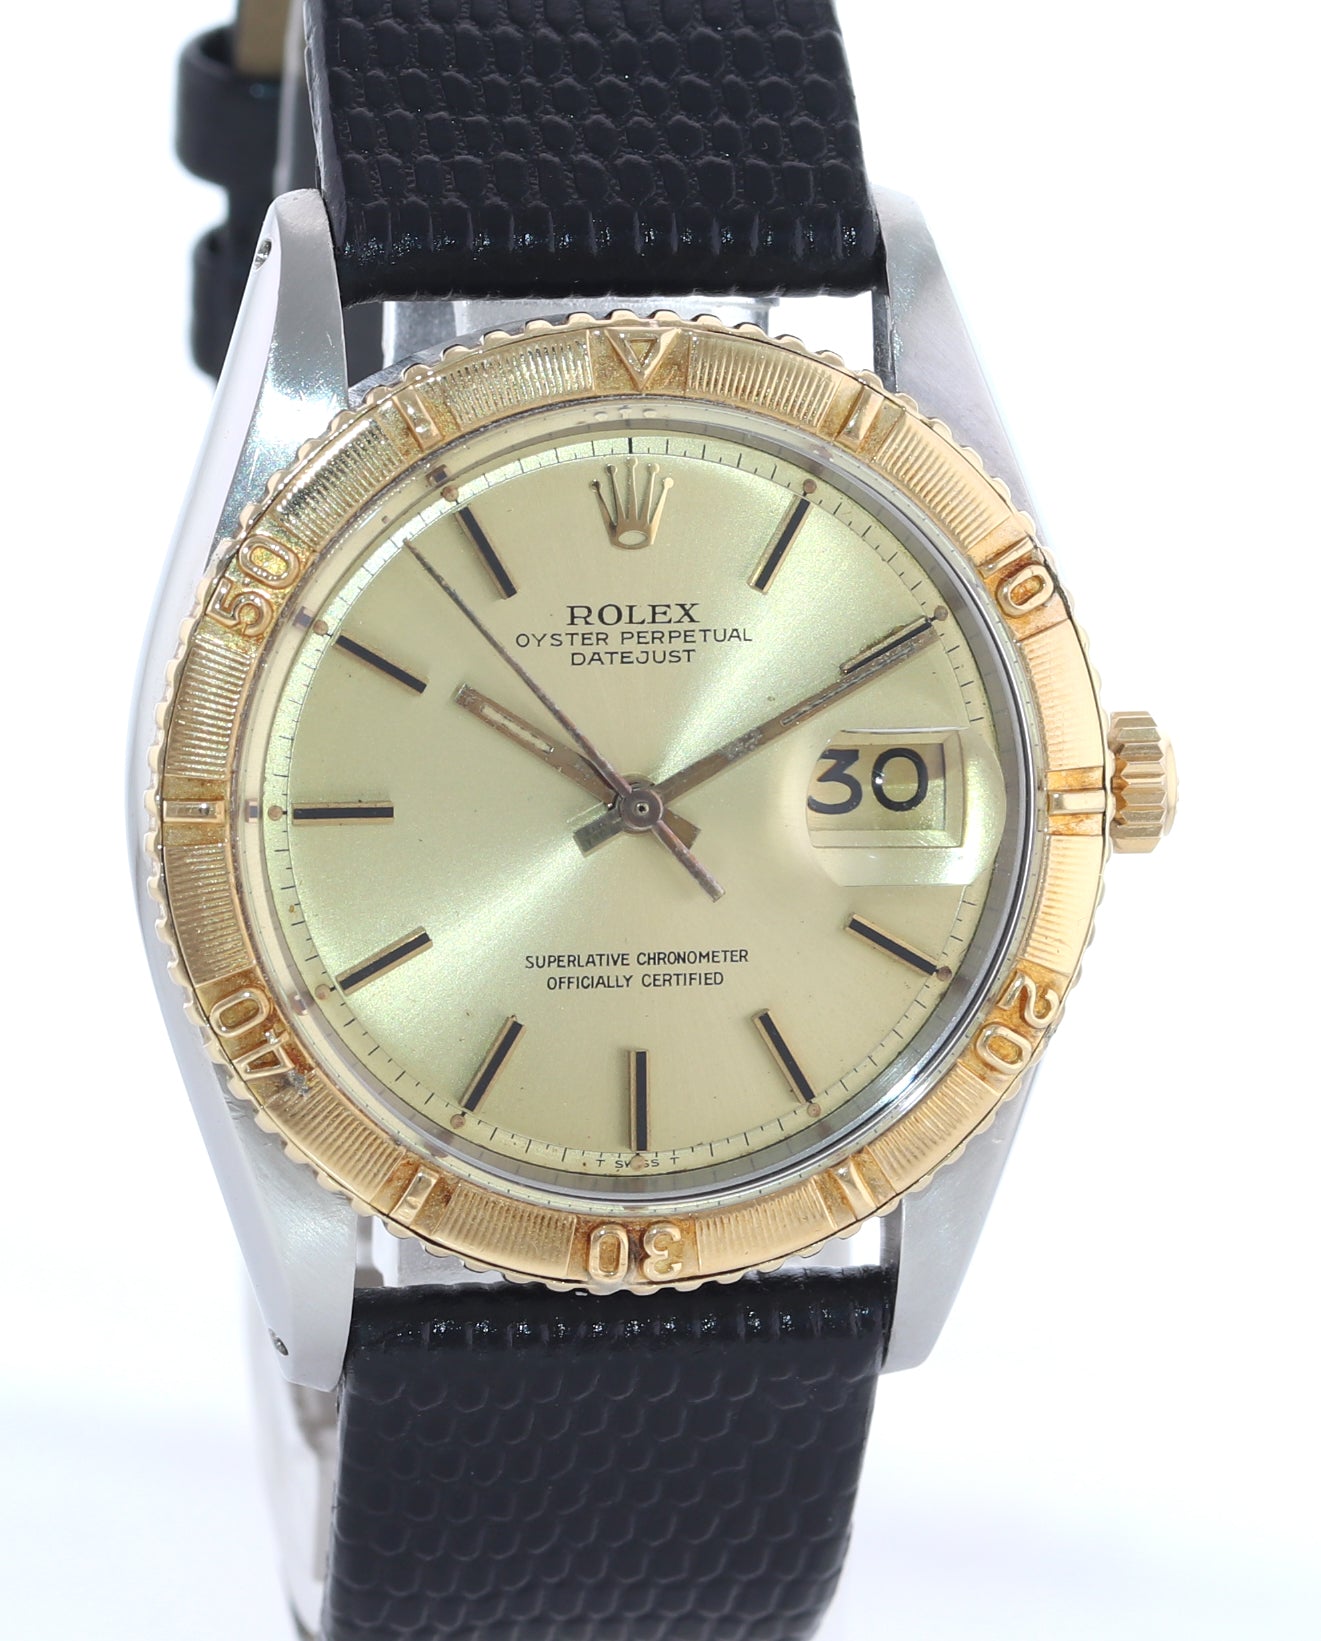 VINTAGE Rolex DateJust 1625 Turn-O-Graph 36mm Steel Gold Thunderbird Date Watch